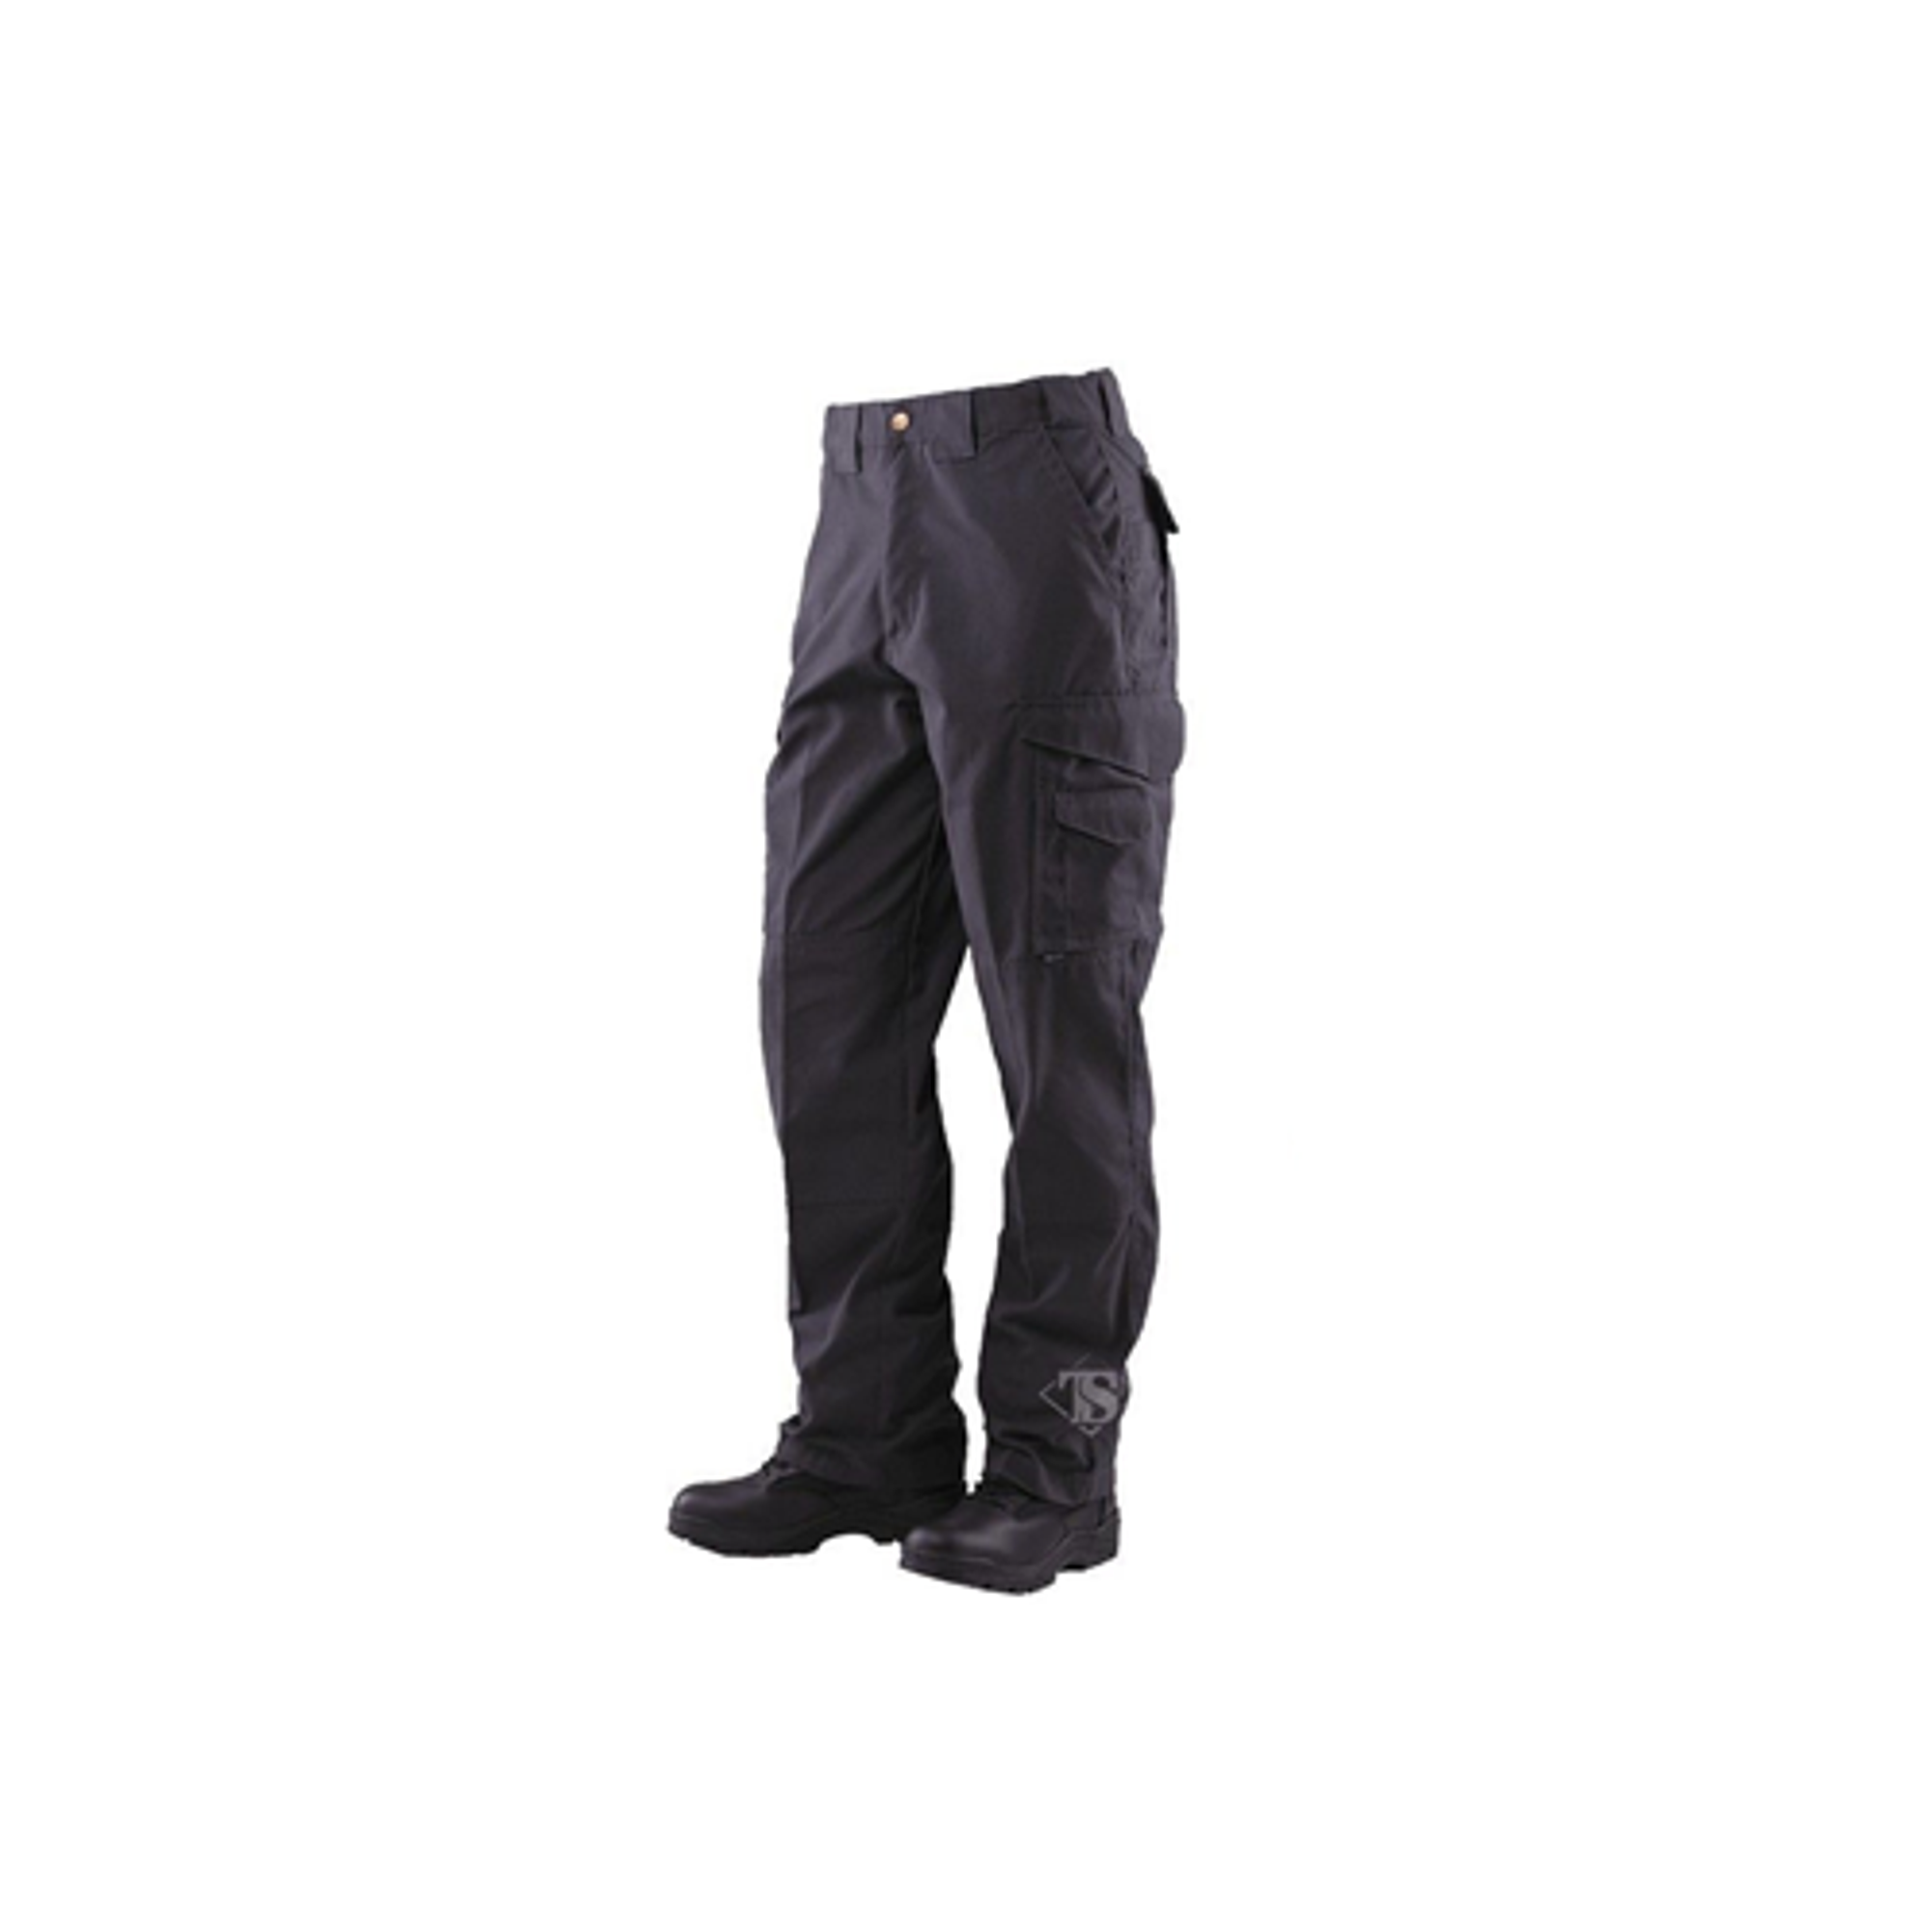 24-7 Original Tactical Pants - 6.5oz - Black - KRTSP-1062024